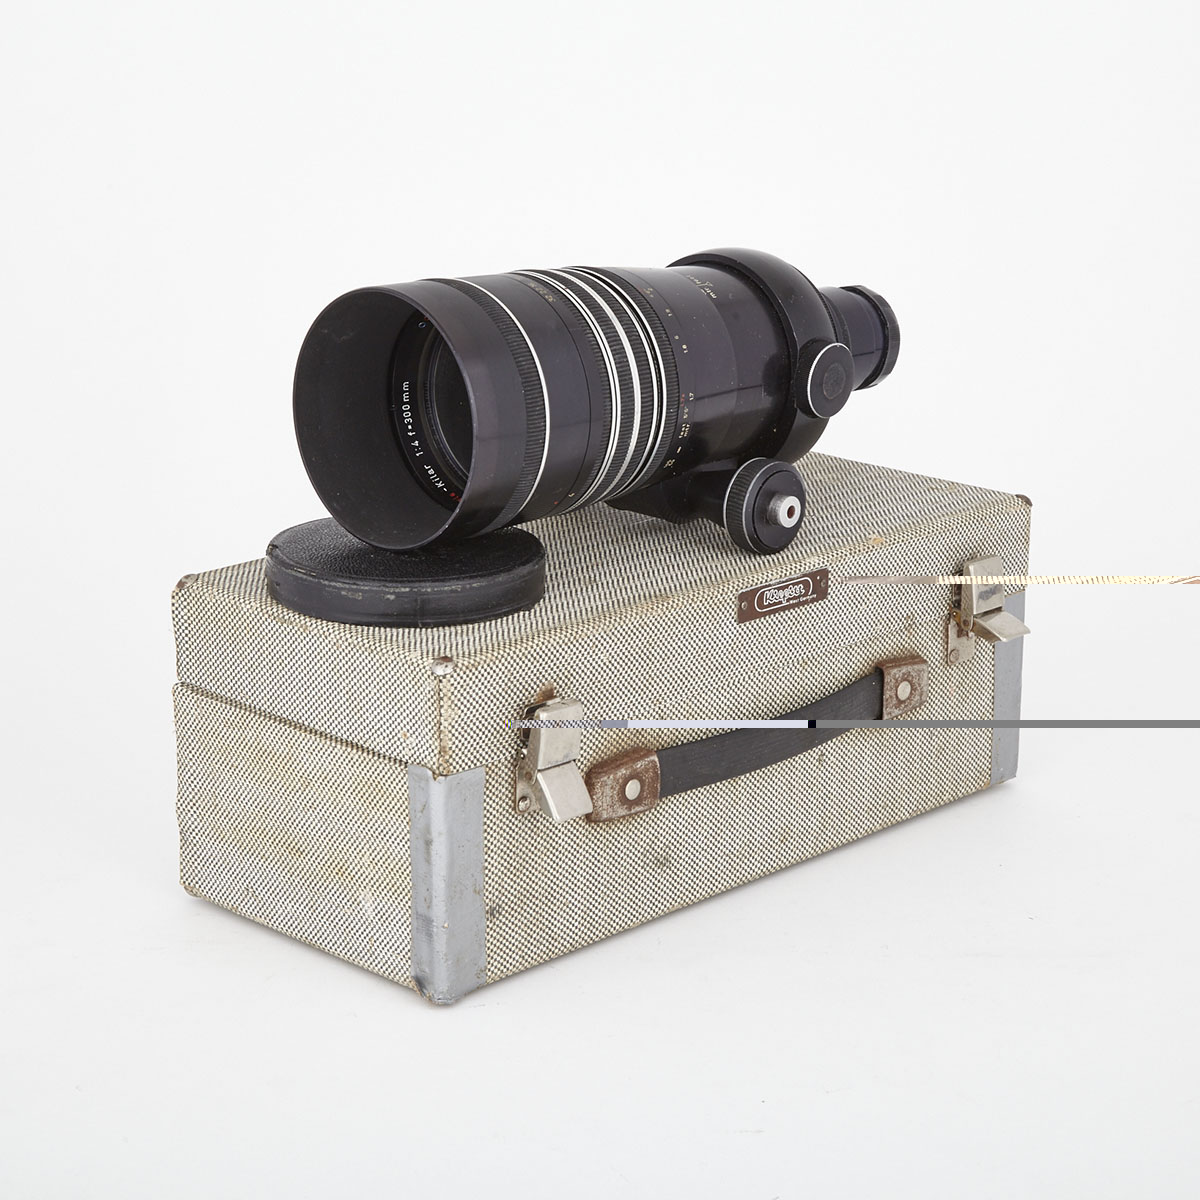 Heinz Kilfitt Pan-Tele-Kilar 1:4 f=300mm Apochromatic Lens, c.1962